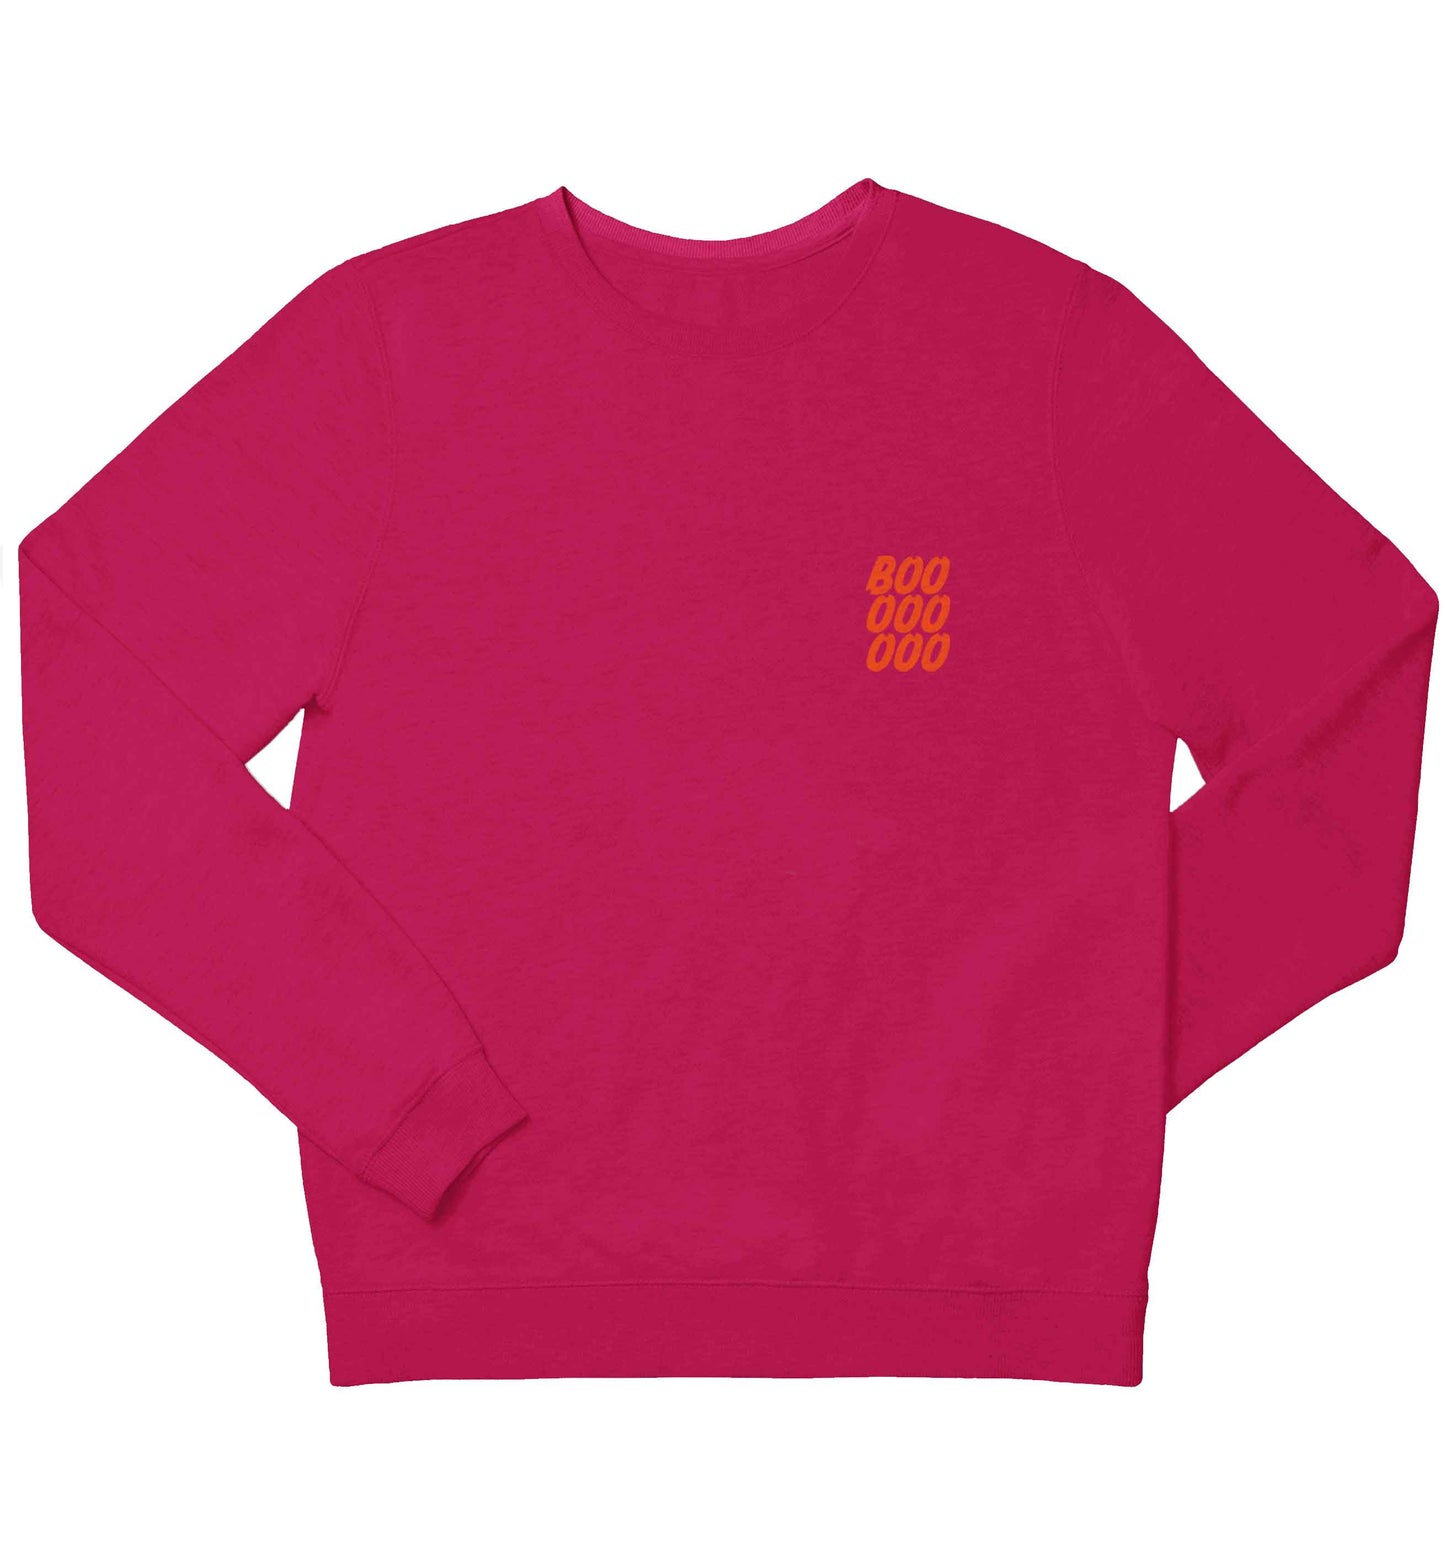 Boo pocket children's pink sweater 12-13 Years